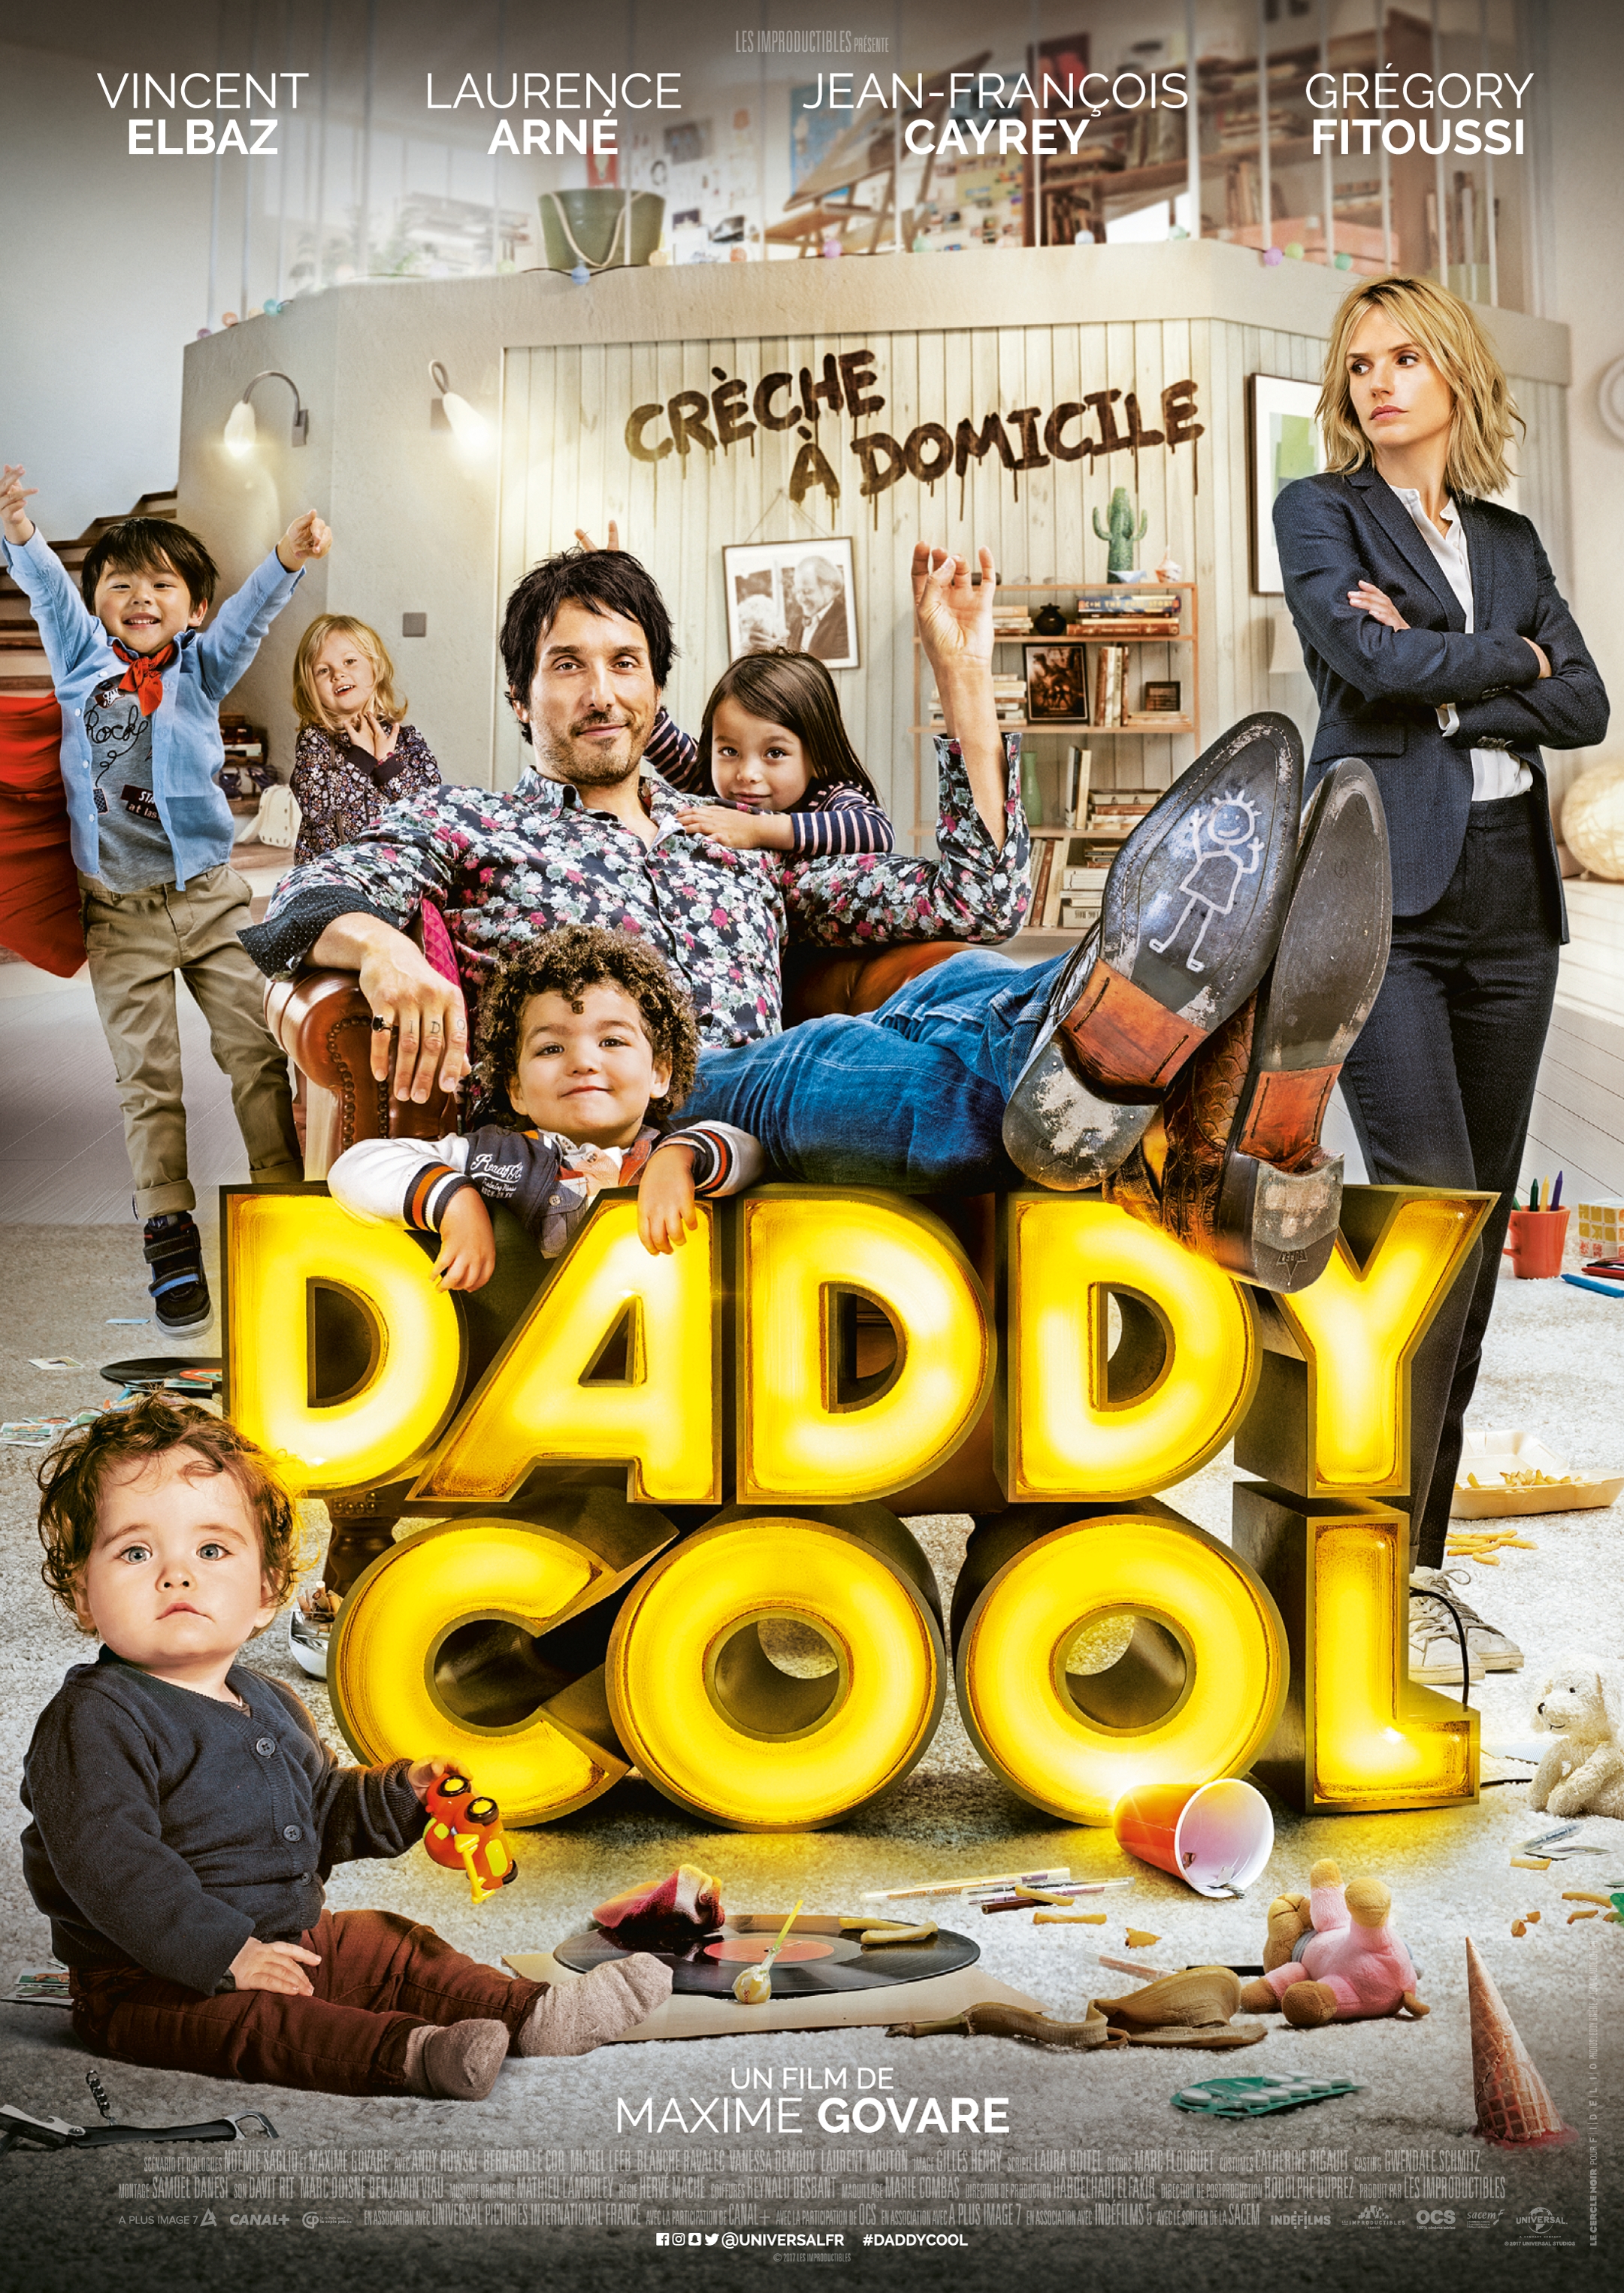 Nonton film Daddy Cool layarkaca21 indoxx1 ganool online streaming terbaru